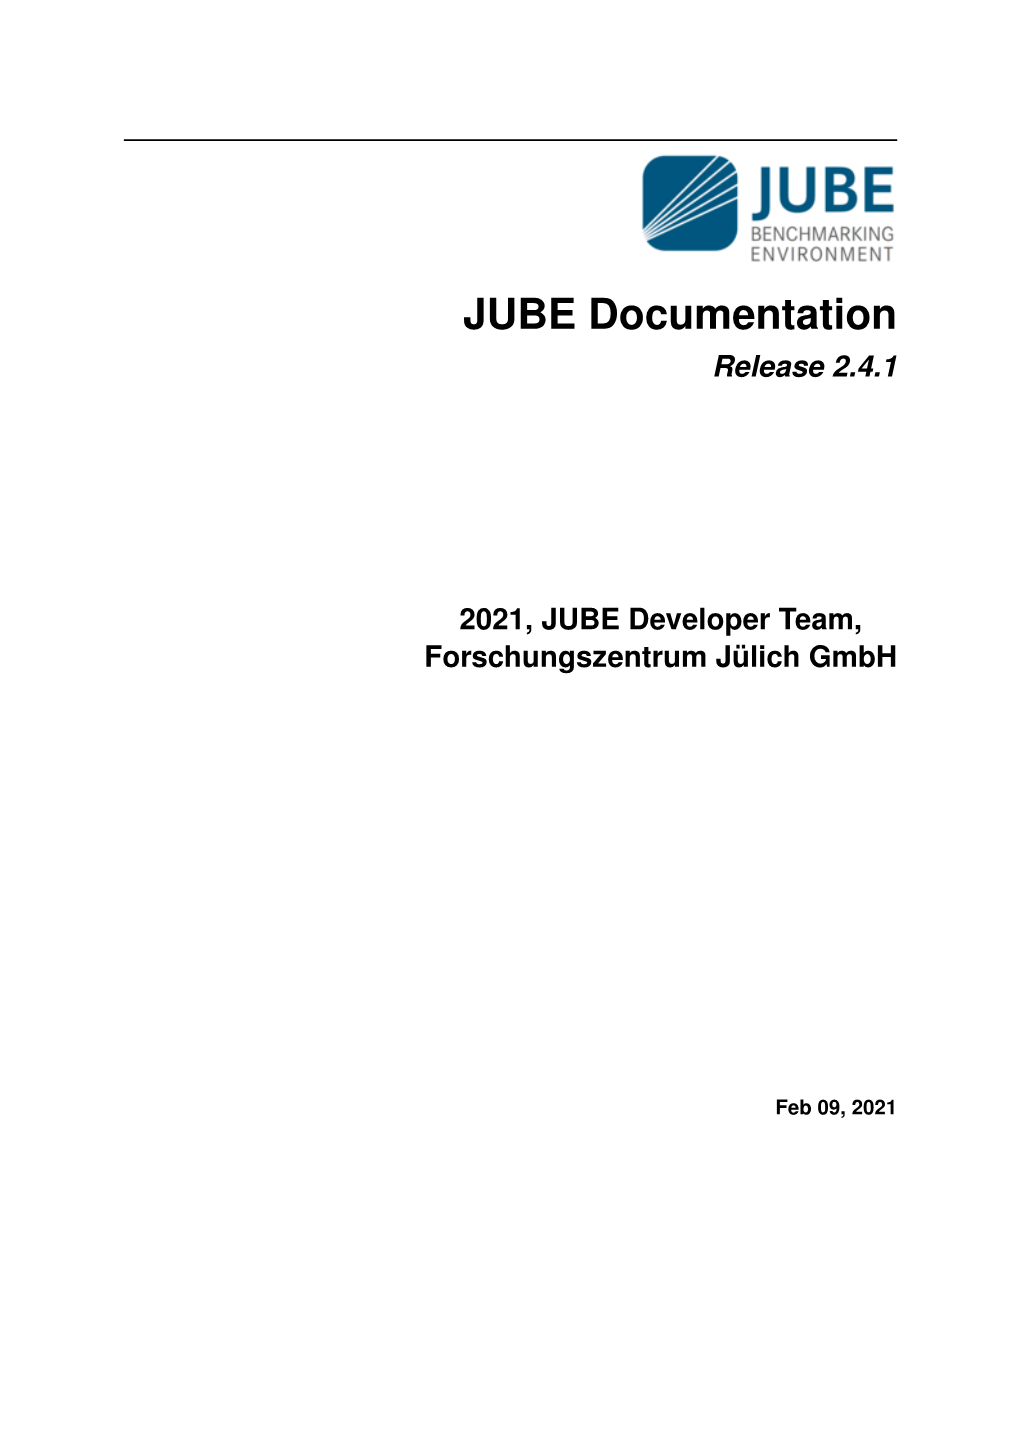 JUBE Documentation Release 2.4.1